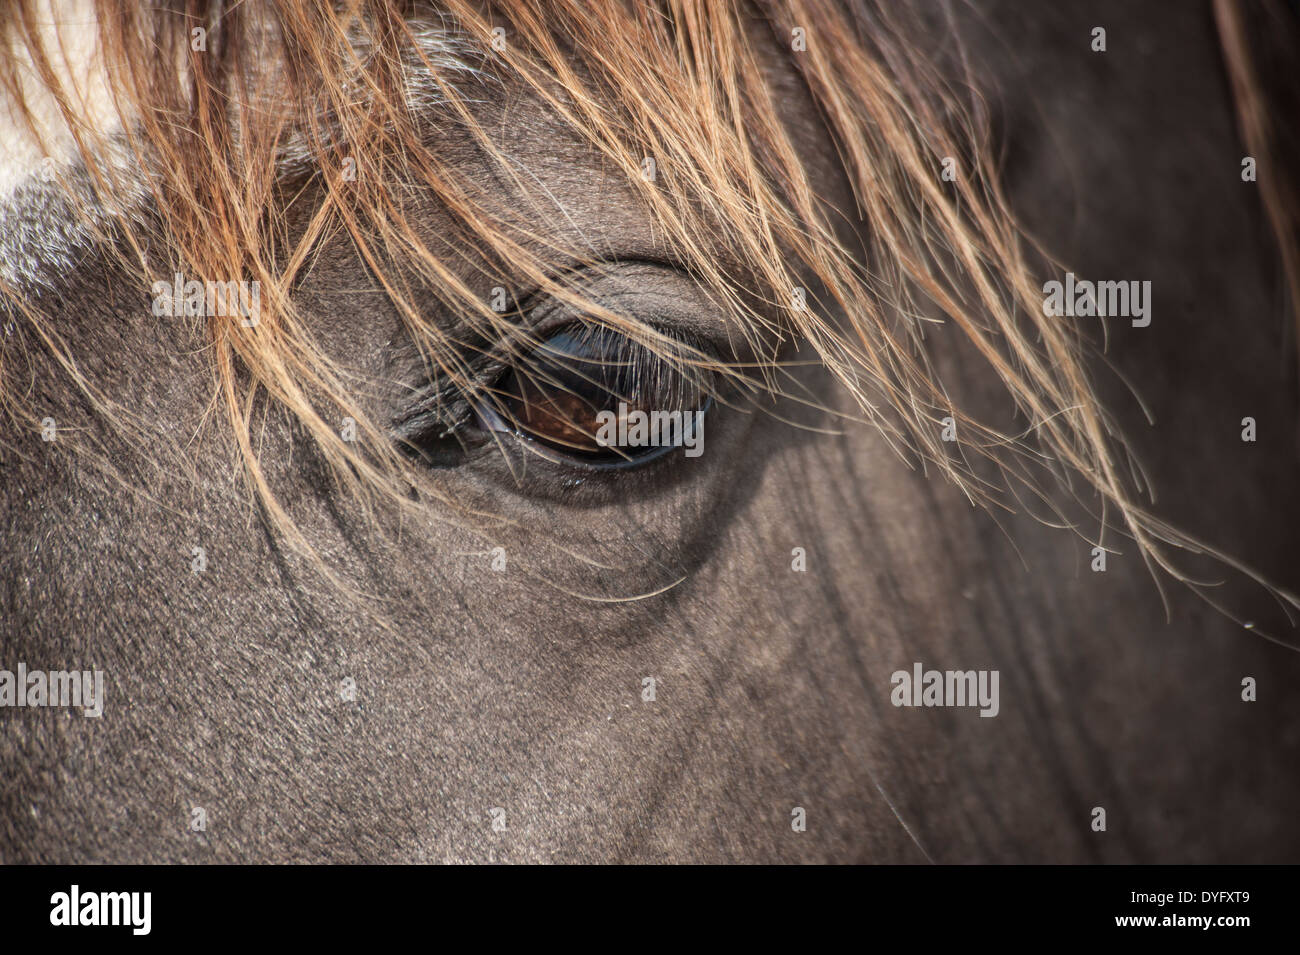 Detalle del ojo caballos Foto de stock